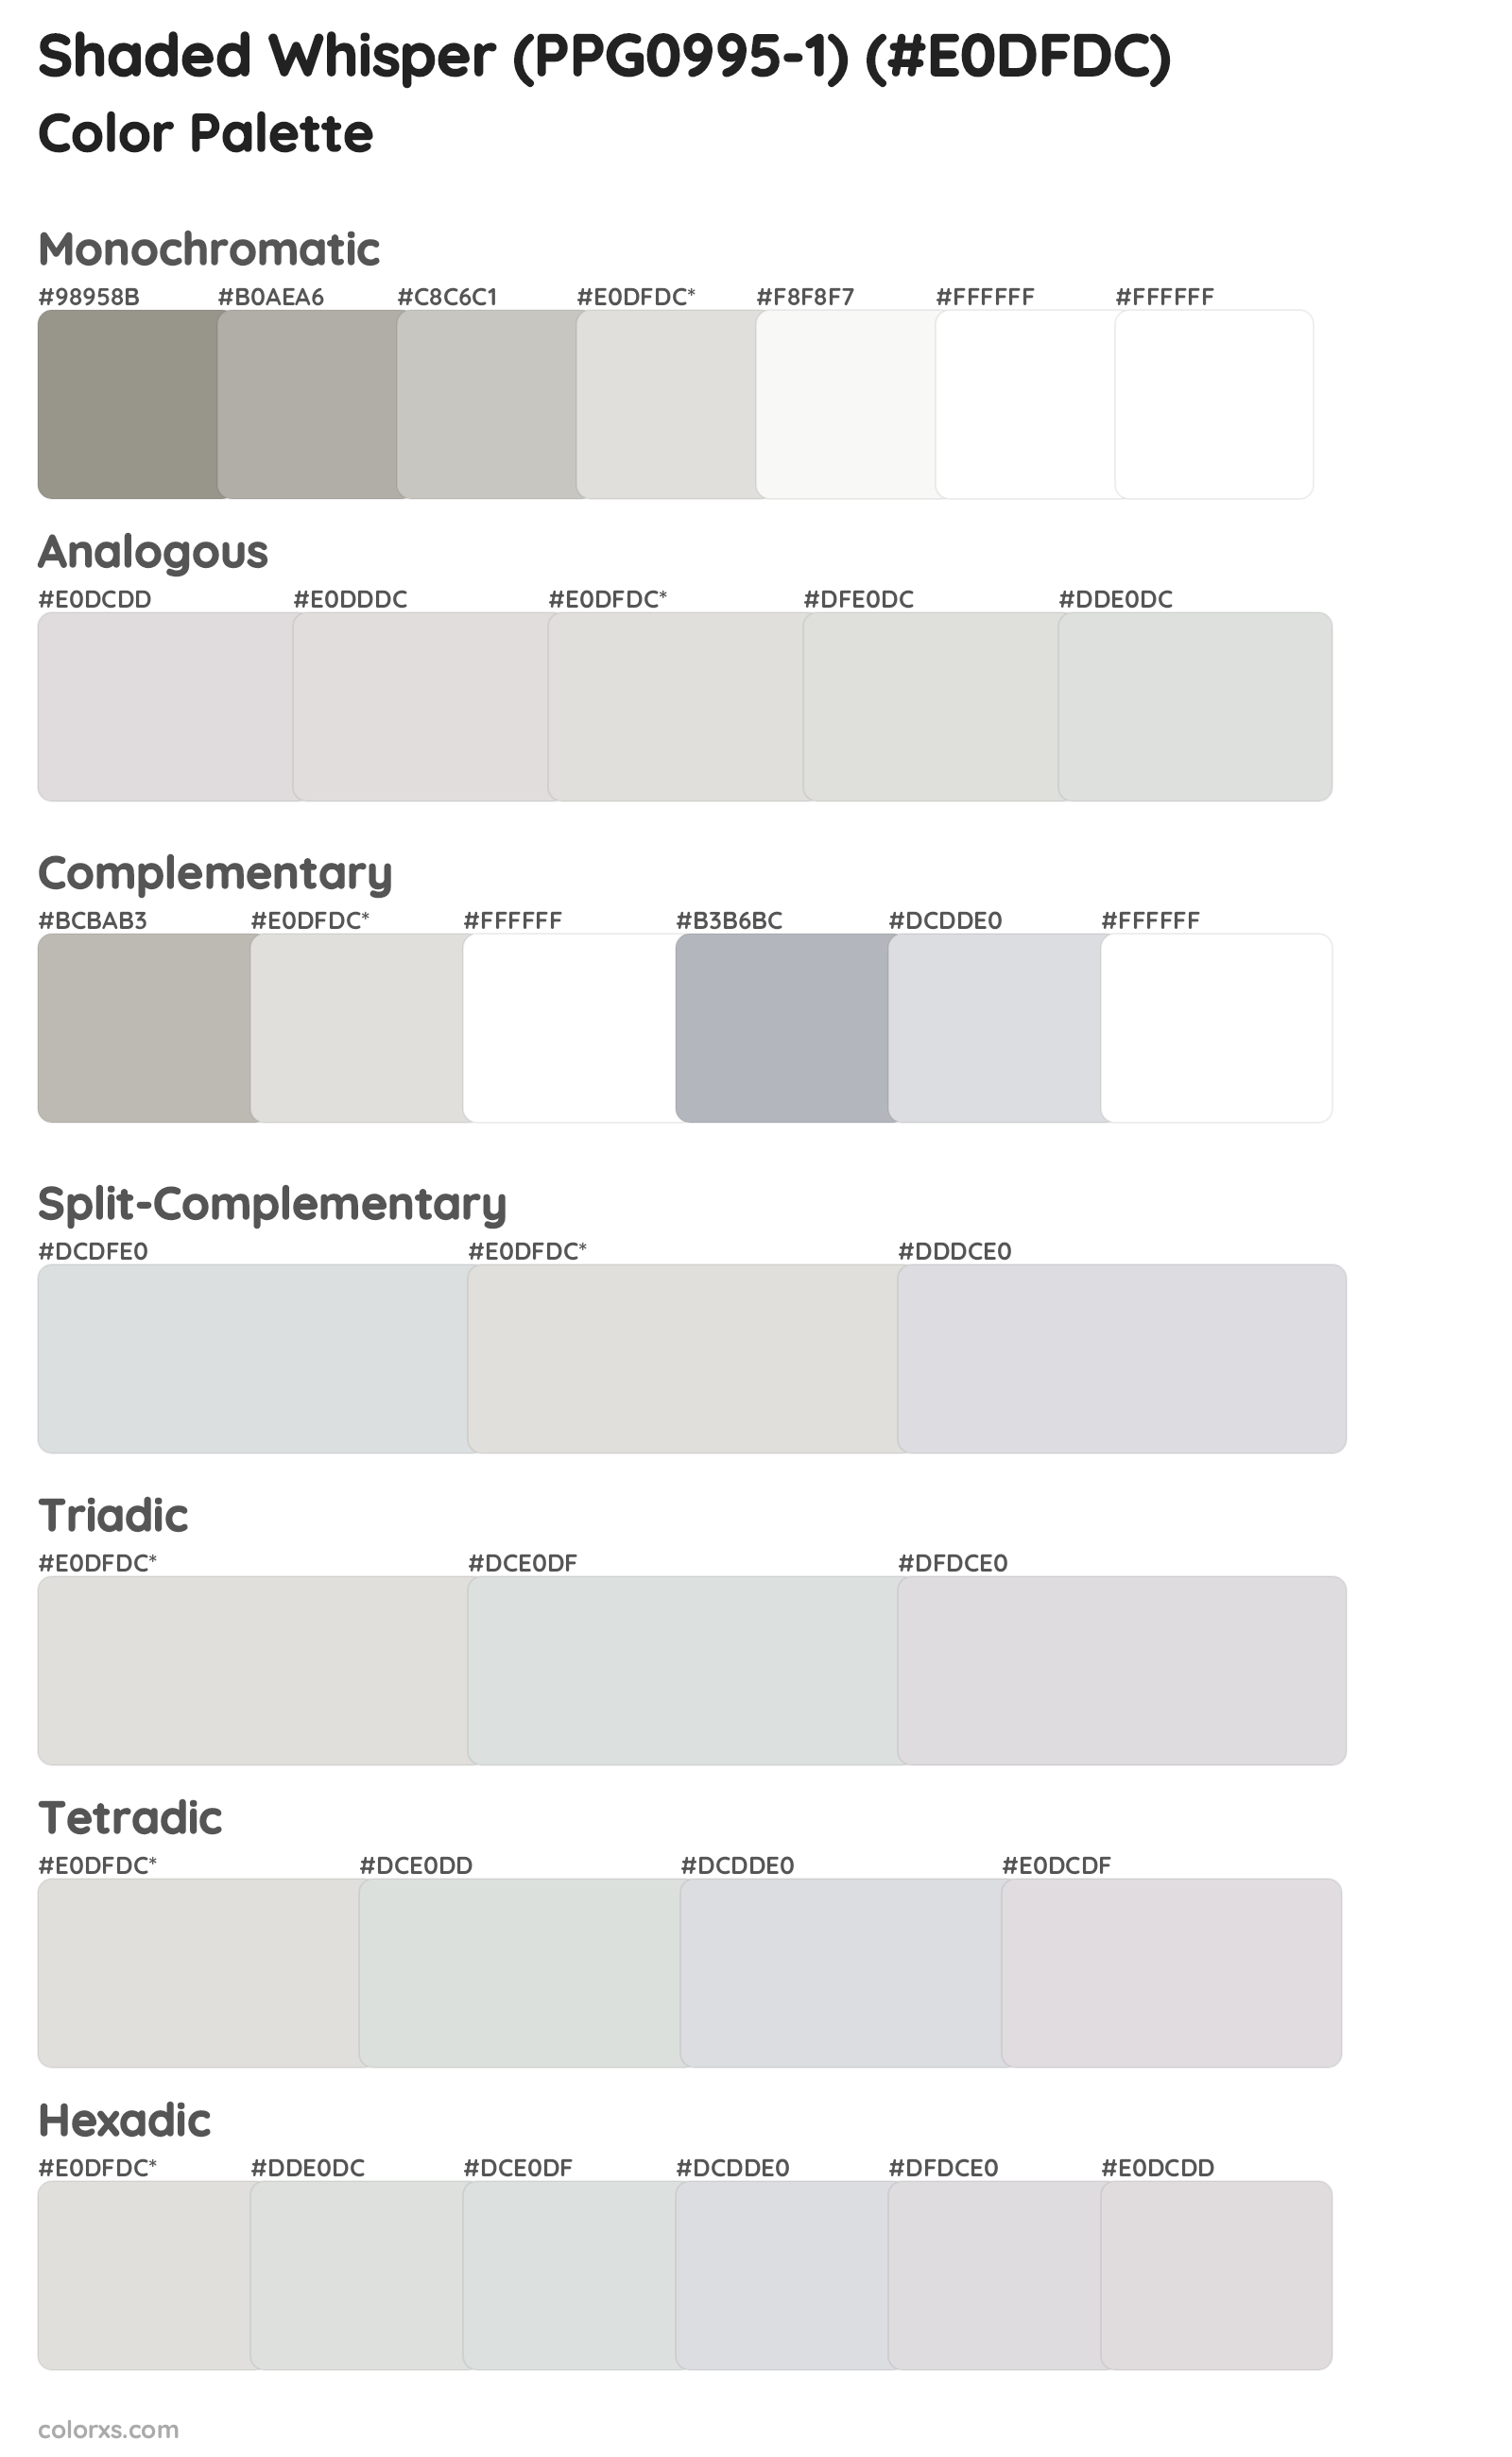 Shaded Whisper (PPG0995-1) Color Scheme Palettes